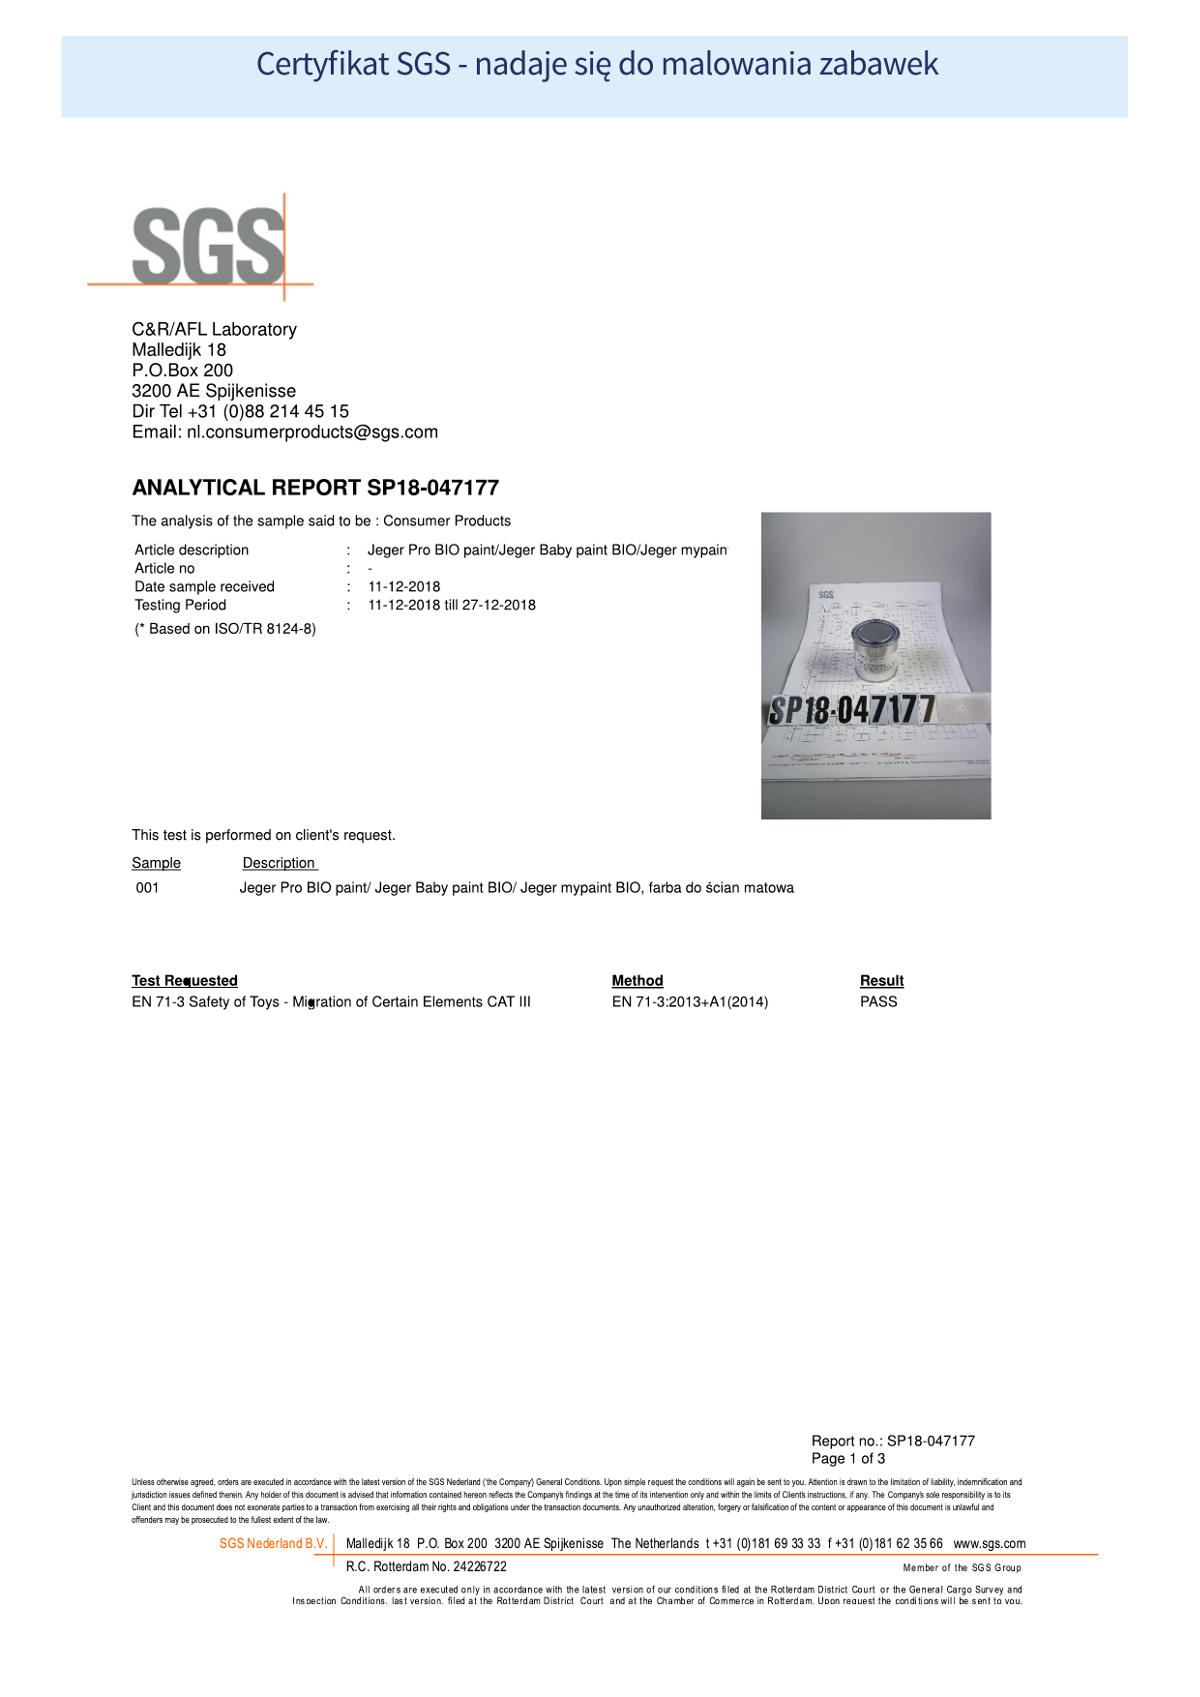 Certyfikat BIO: USDA Certified Bio Based Product